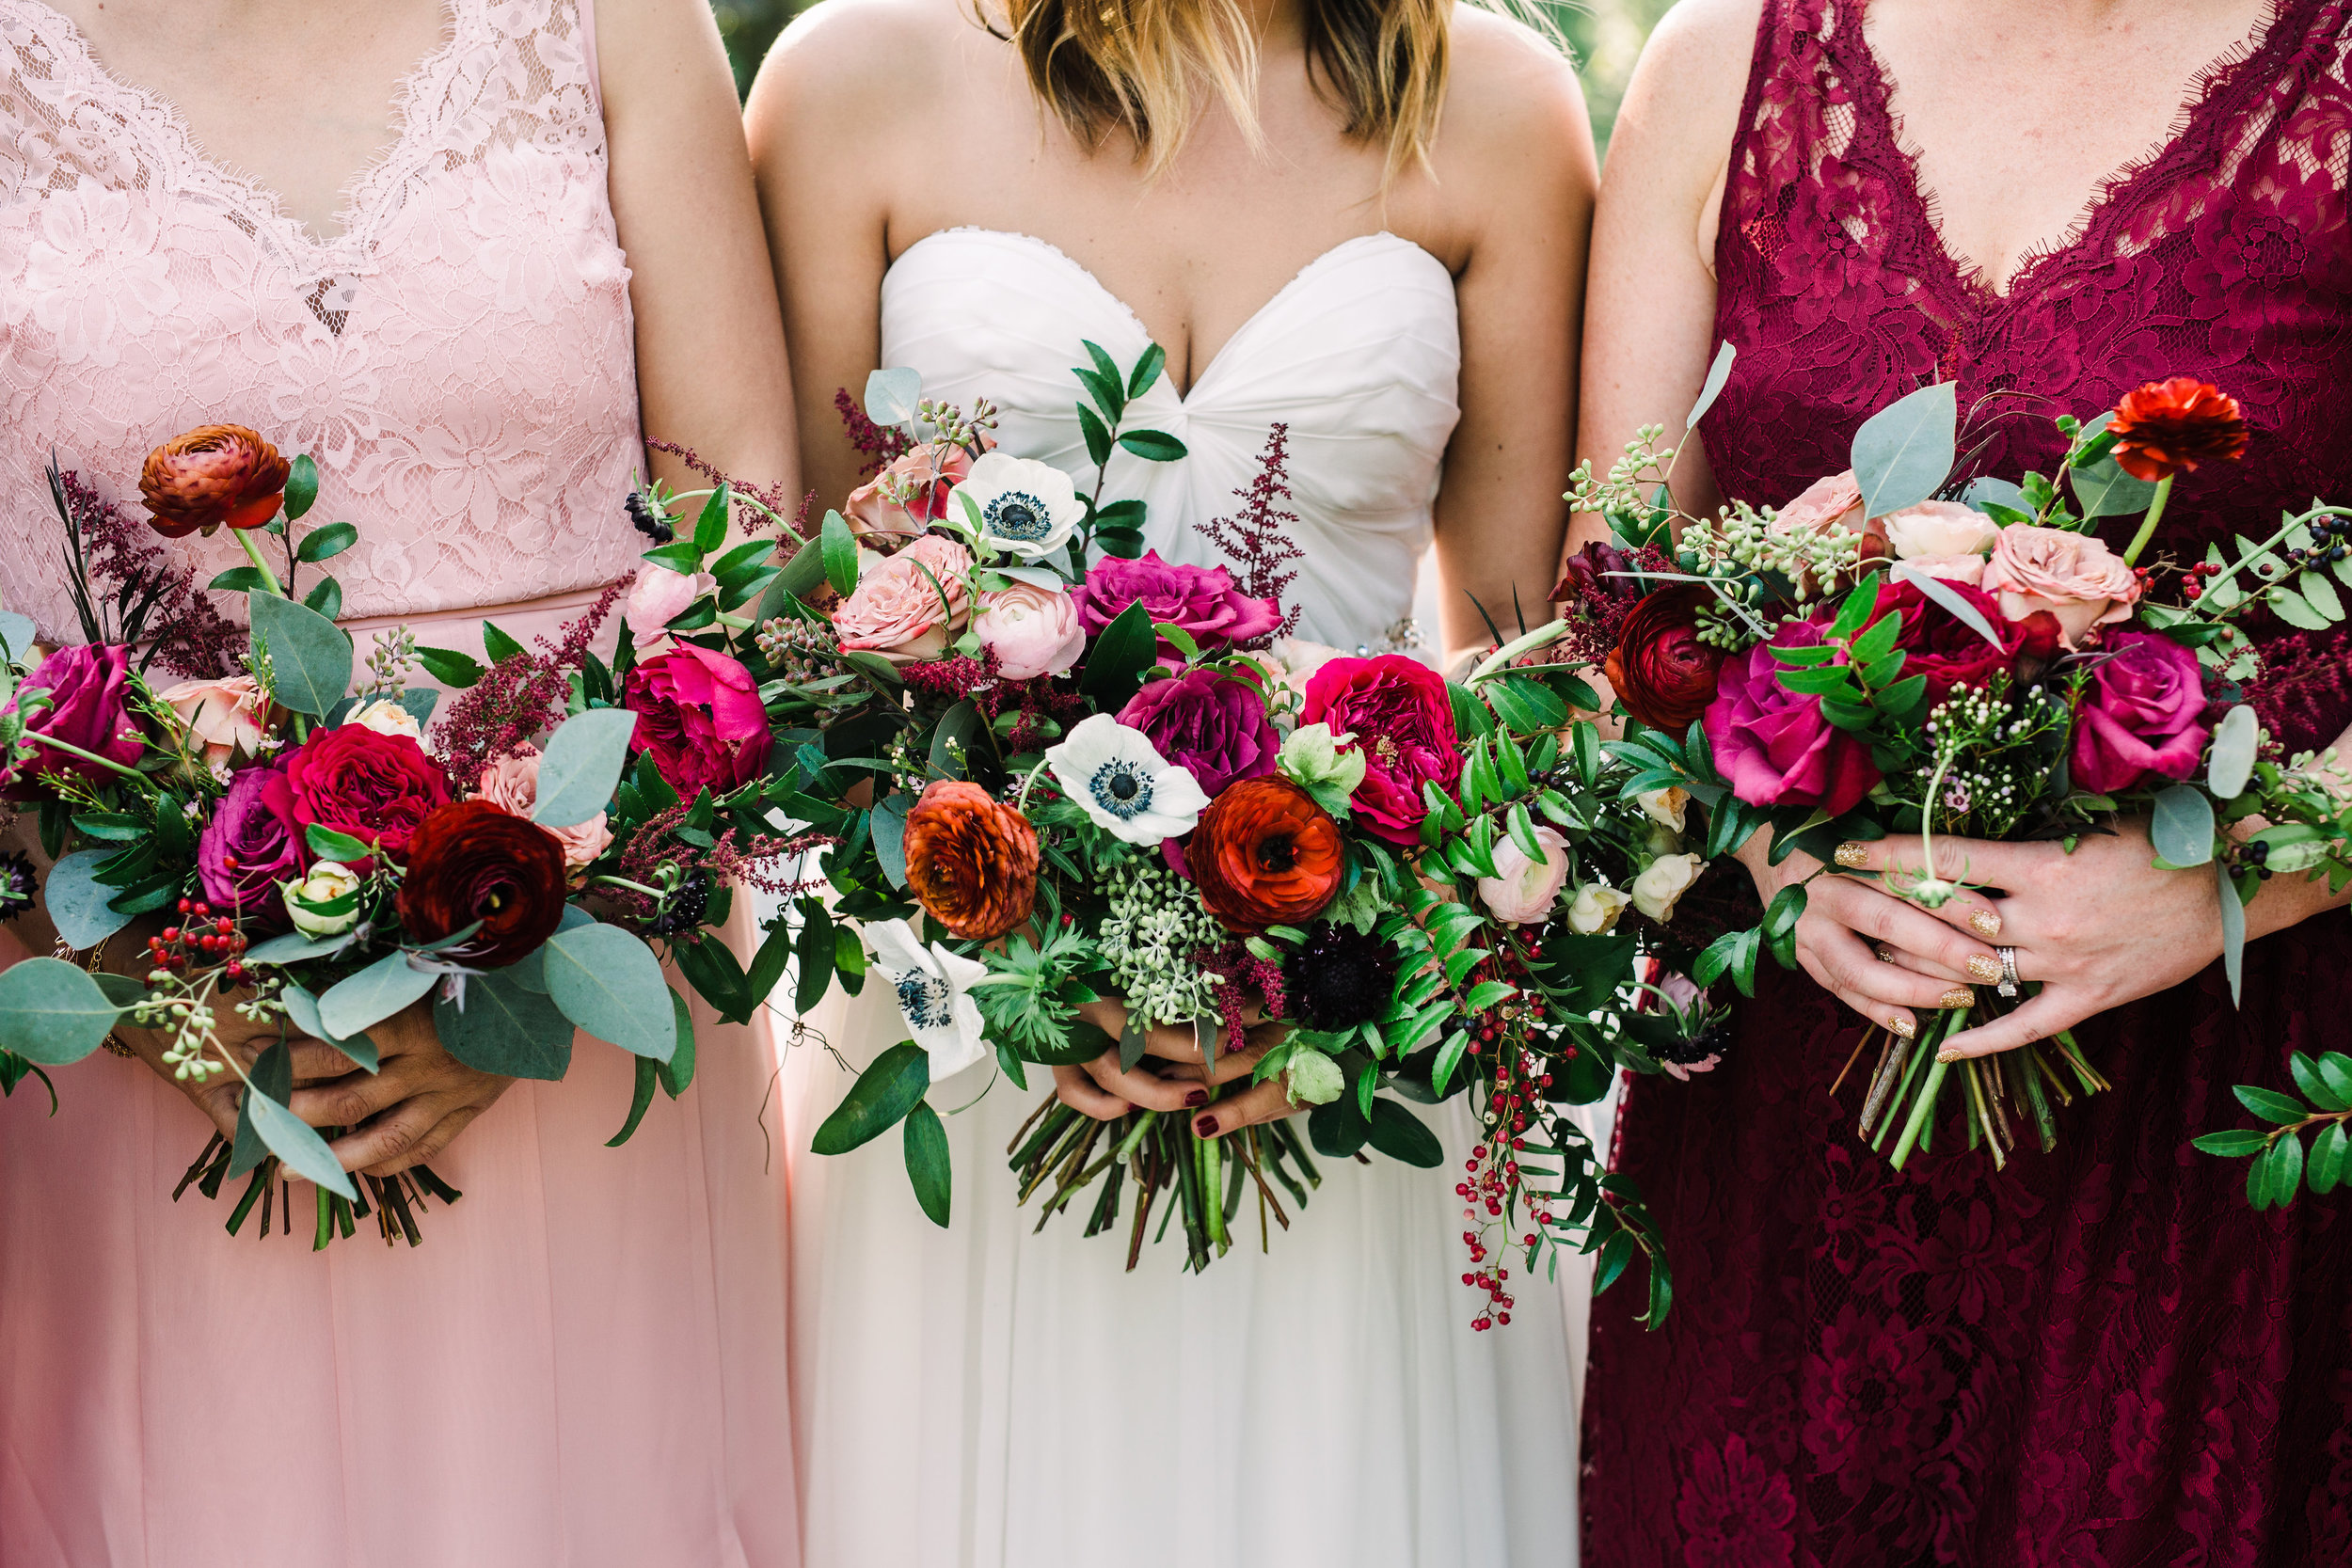 Natural bridal bouquet with marsala ranunculus, anemones, and trailing greenery // Nashville Wedding Floral Design